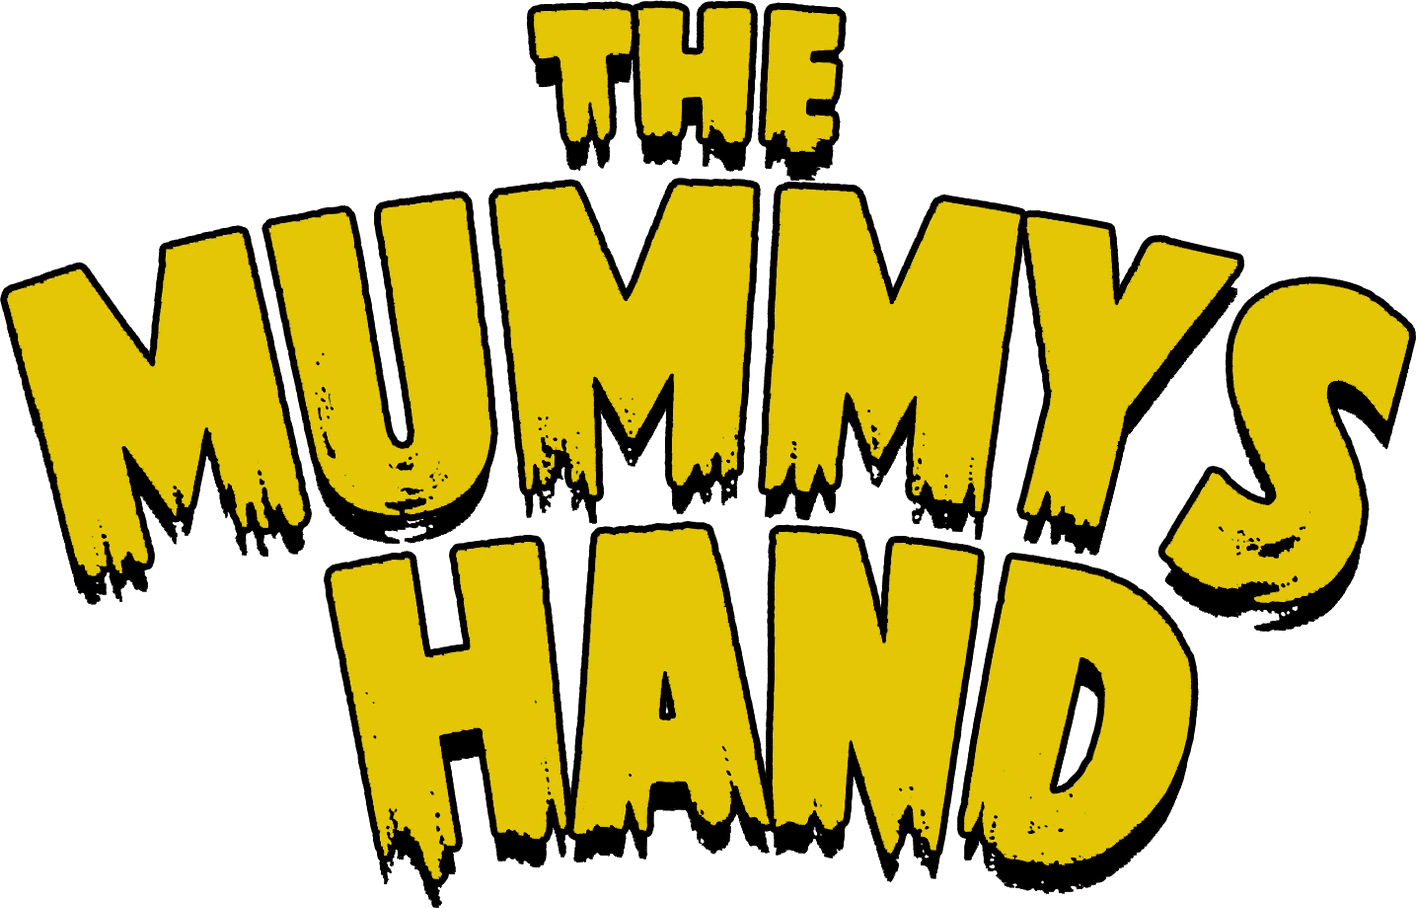 The Mummy's Hand logo